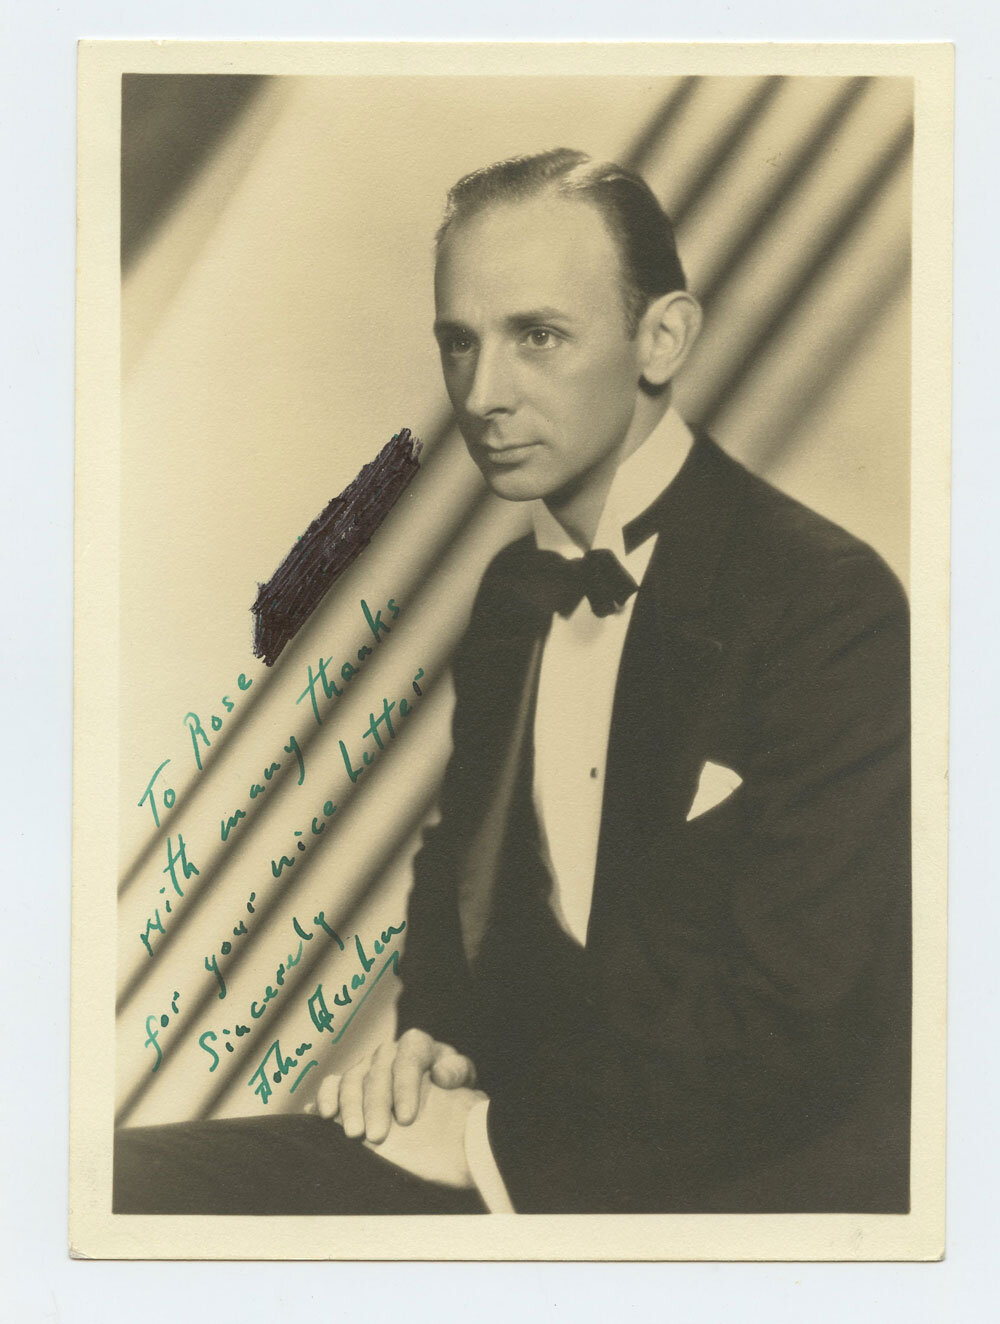 John Qualen Photo 1941 Autographed Inscribed Original Vintage